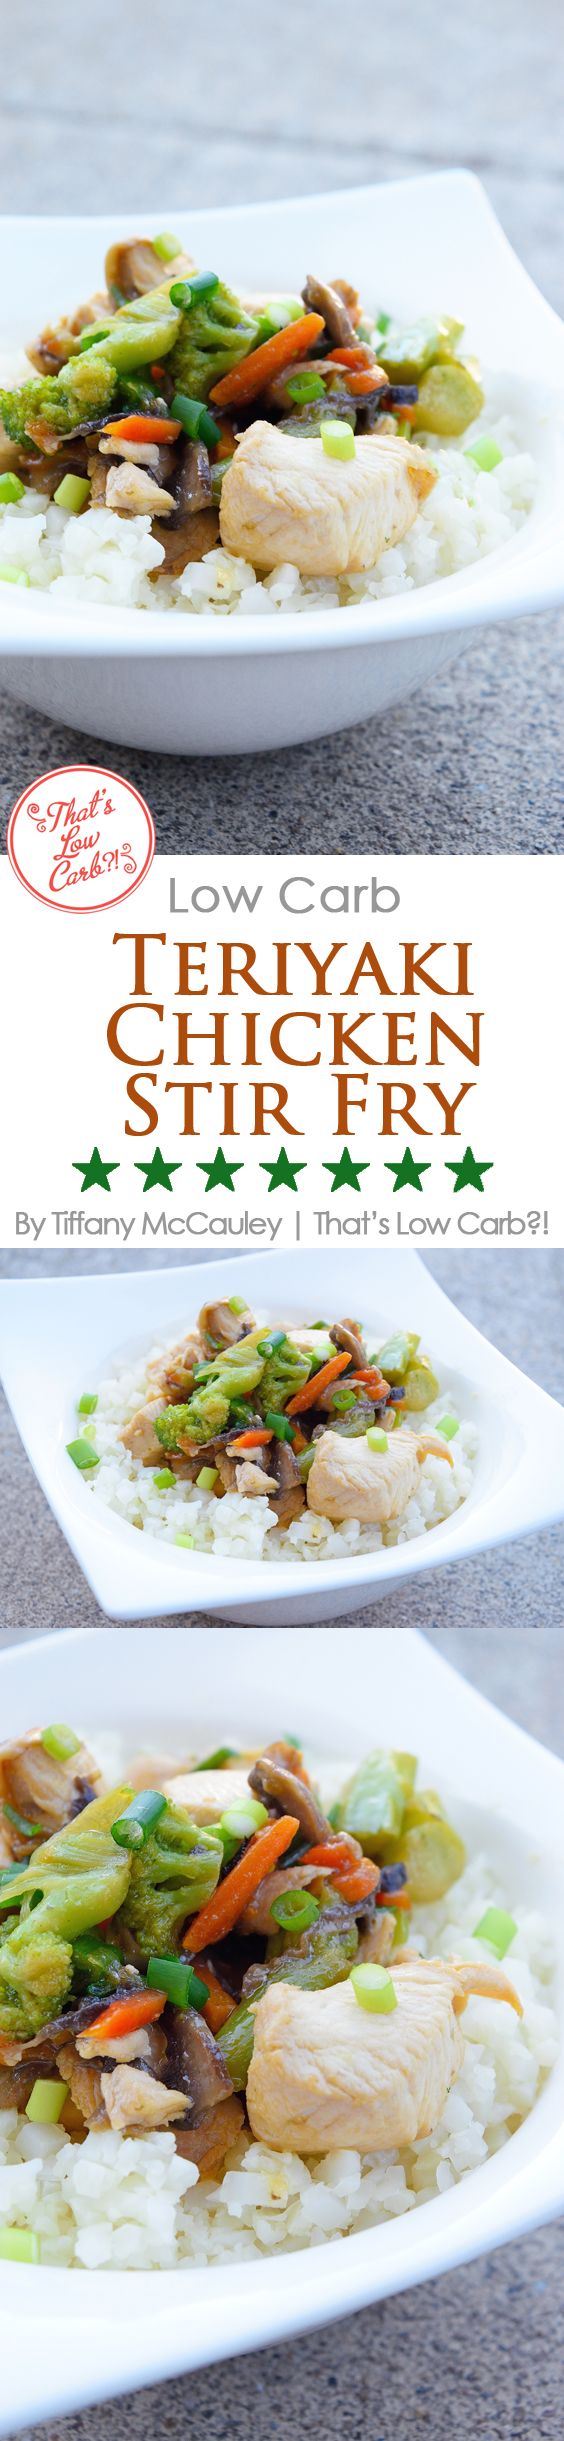 Low Carb Teriyaki Chicken Stir Fry